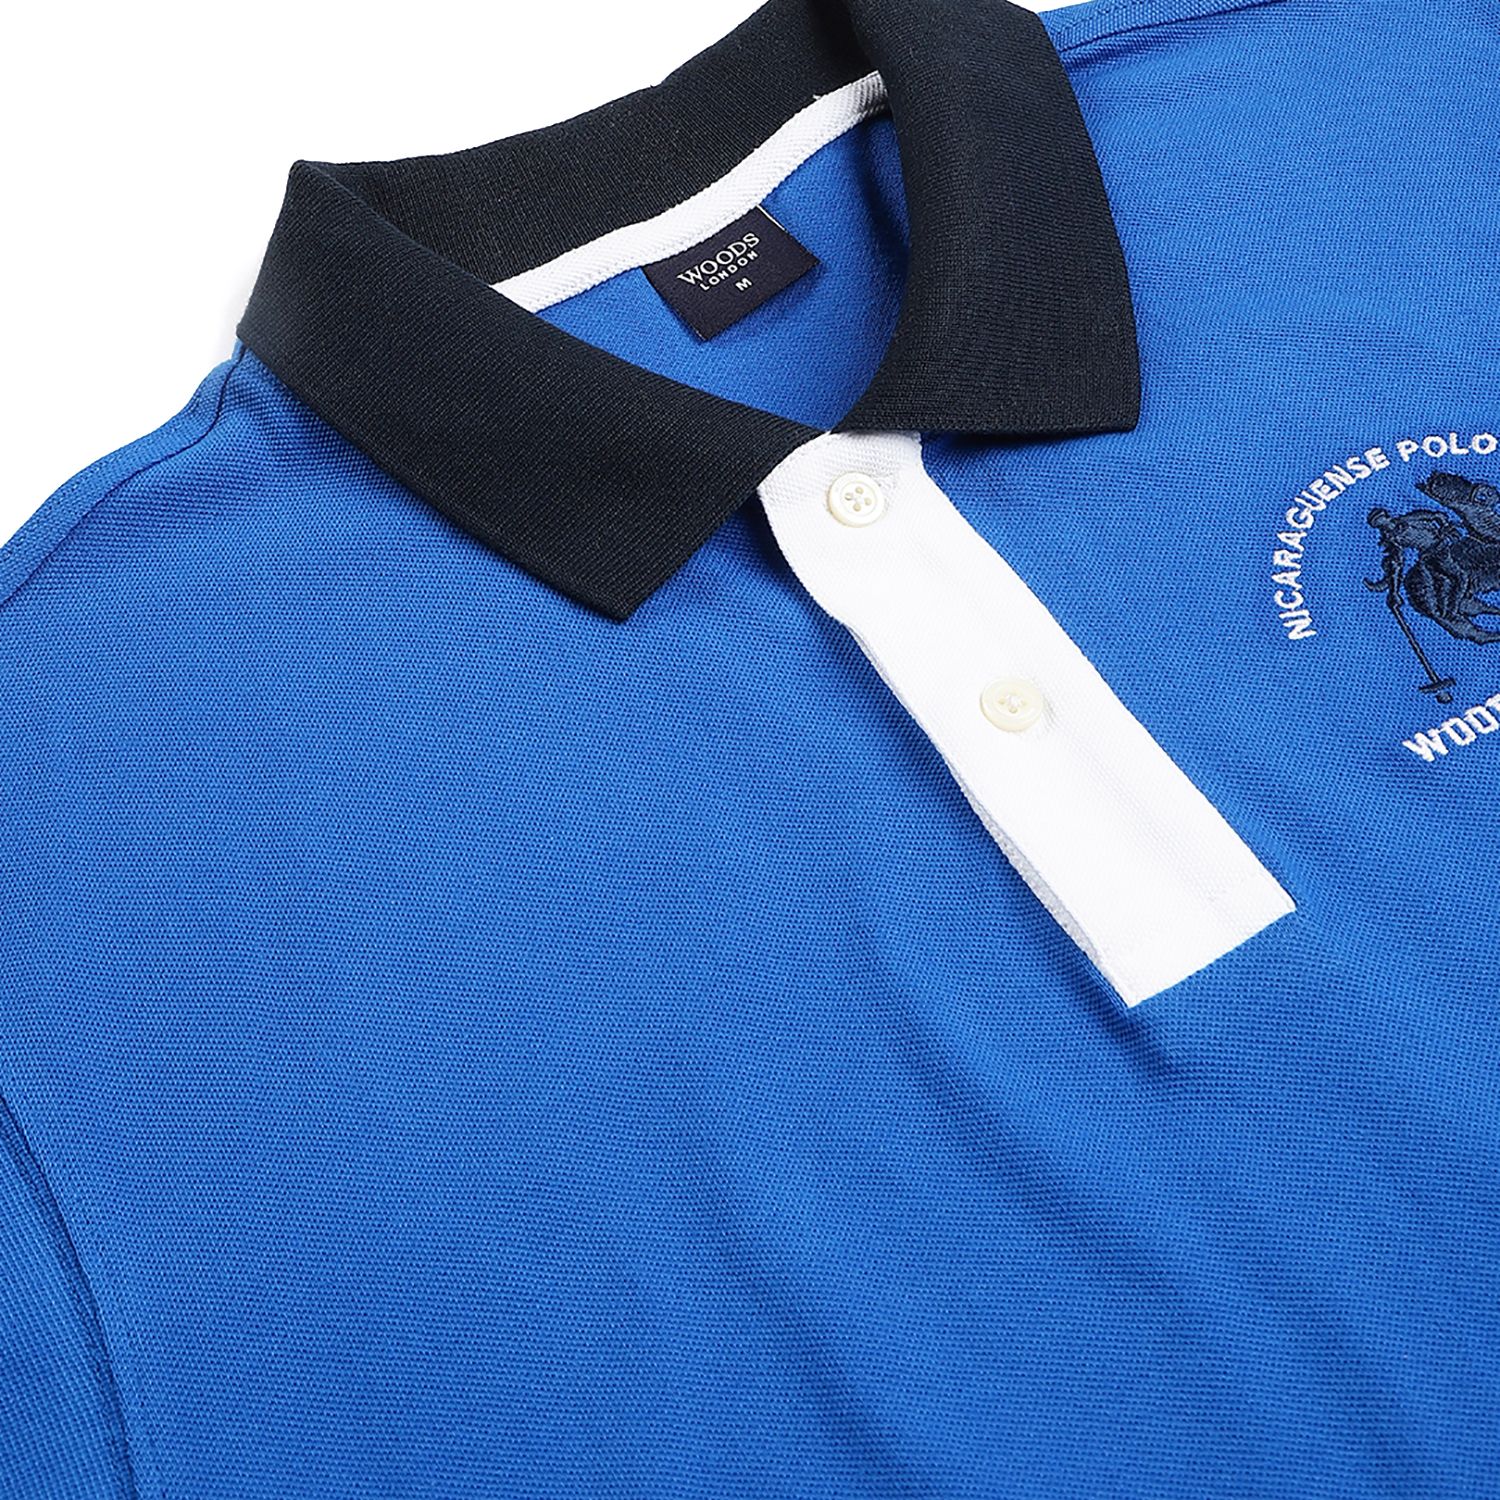 Blue/Navy Polo t-shirt for men